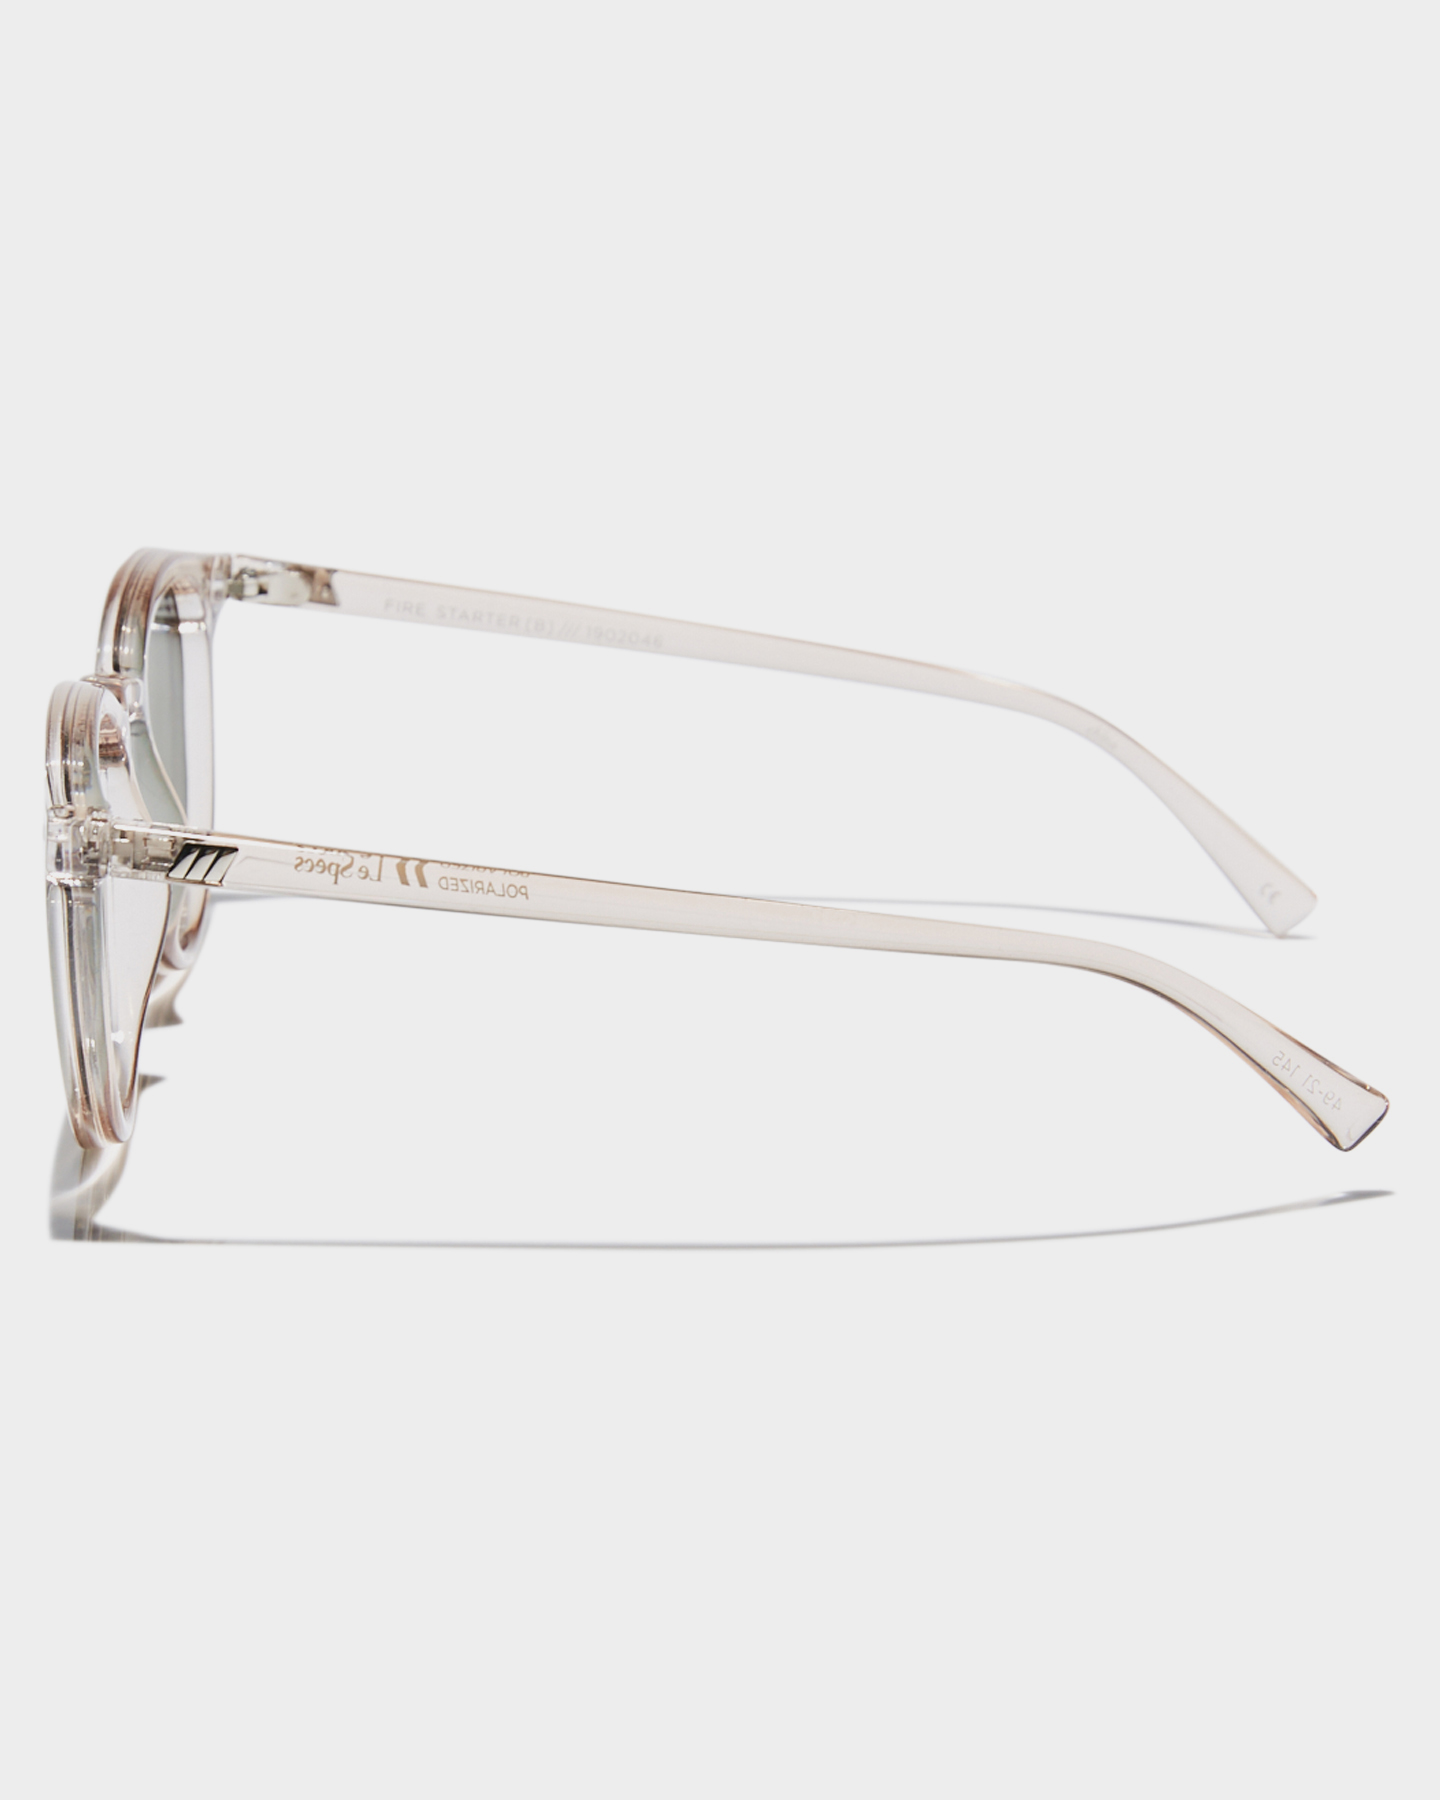 Le Specs Fire Starter Polarized Sunglasses - Stone Gray | SurfStitch